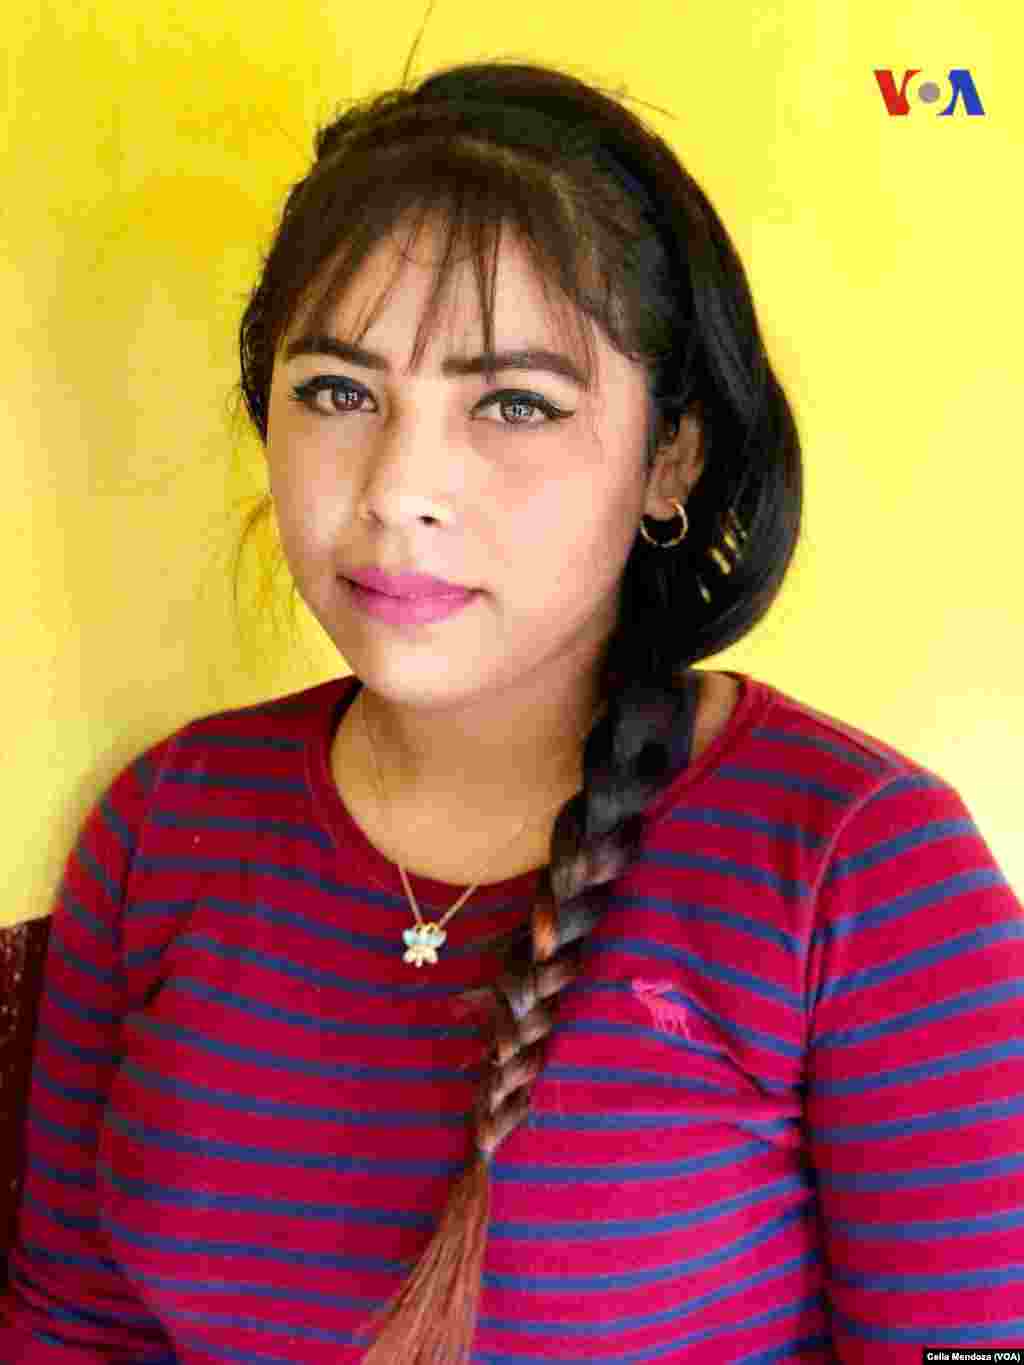 Hermana de Yeni, Vanessa González García de 19 años